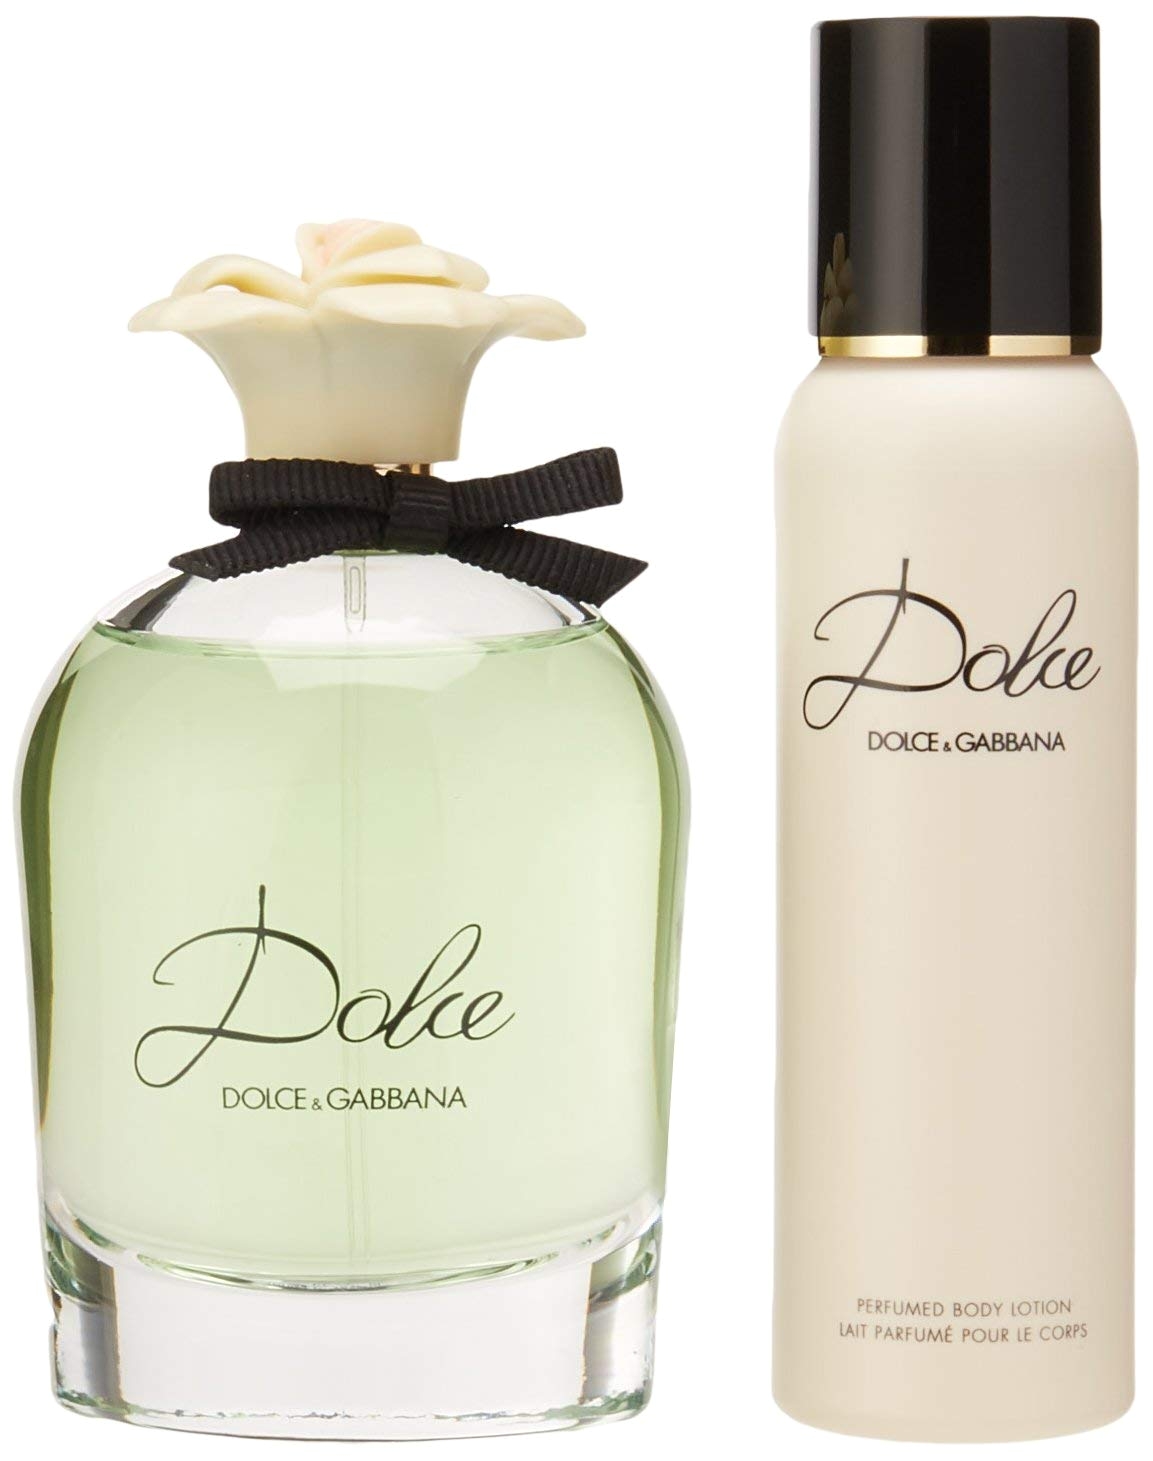 amazon com dolce by dolce and gabbana eau de parfum spray for women 5 ounce dolce beauty